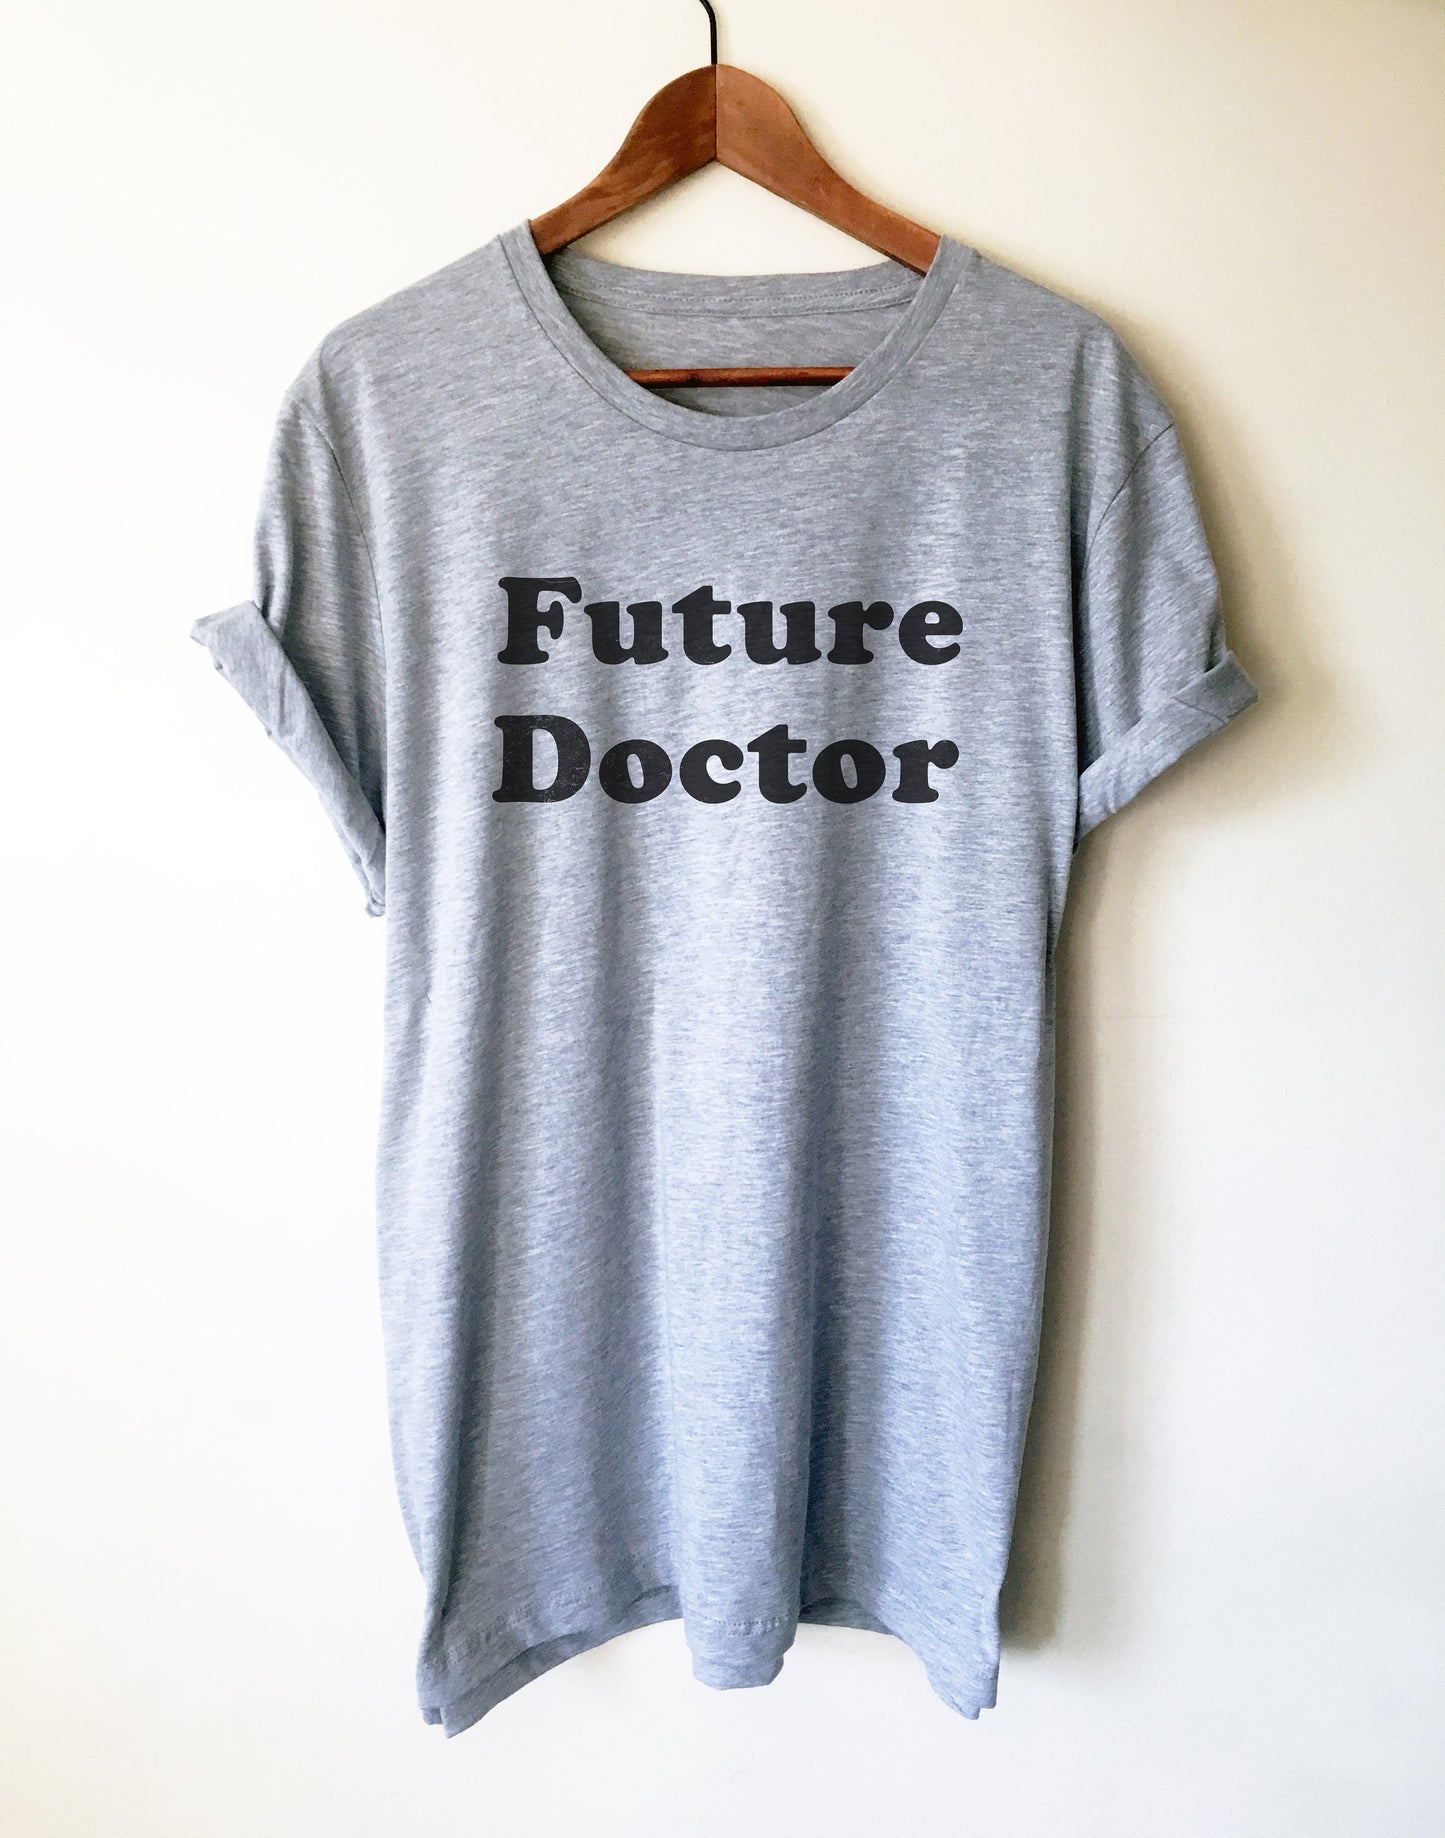 Future Doctor Unisex Shirt - Medical Student Gift, Medical School Gift, Med Student Gift, Doctor Shirt, Medical School Graduation